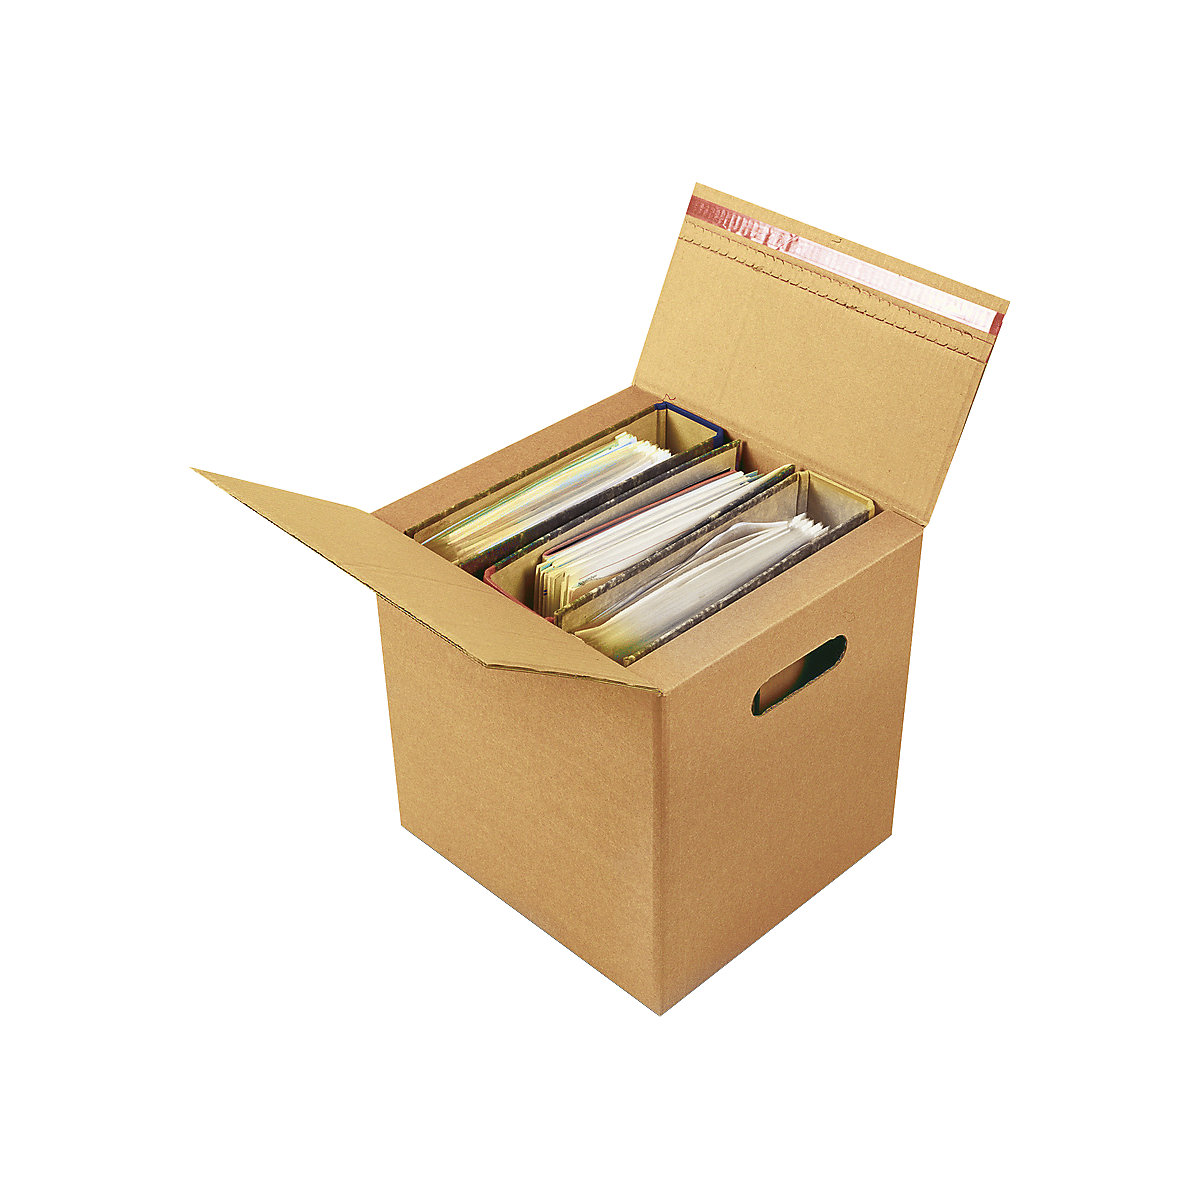 Ordner-Karton, Format A4, Selbstklebeverschluss, Innenmaße 320 x 288 x 315 mm, ab 8 Stk